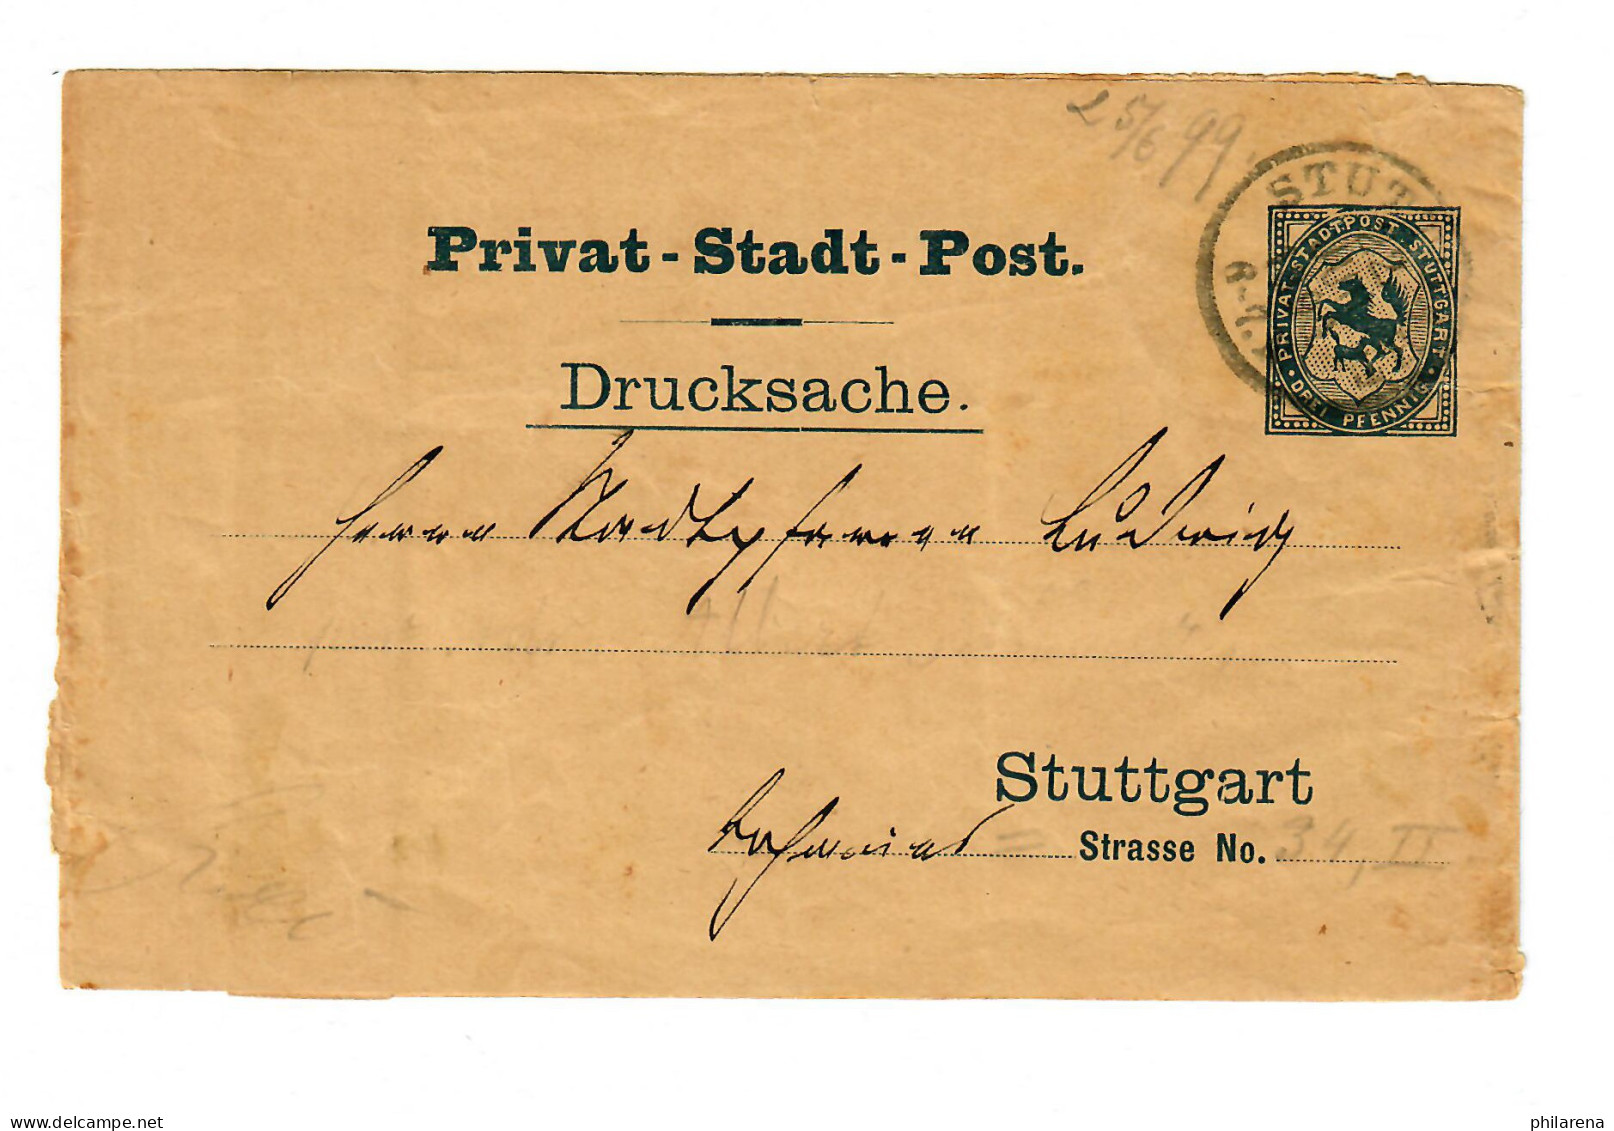 Stadtpost Stuttgart 1899, Streifband - Covers & Documents